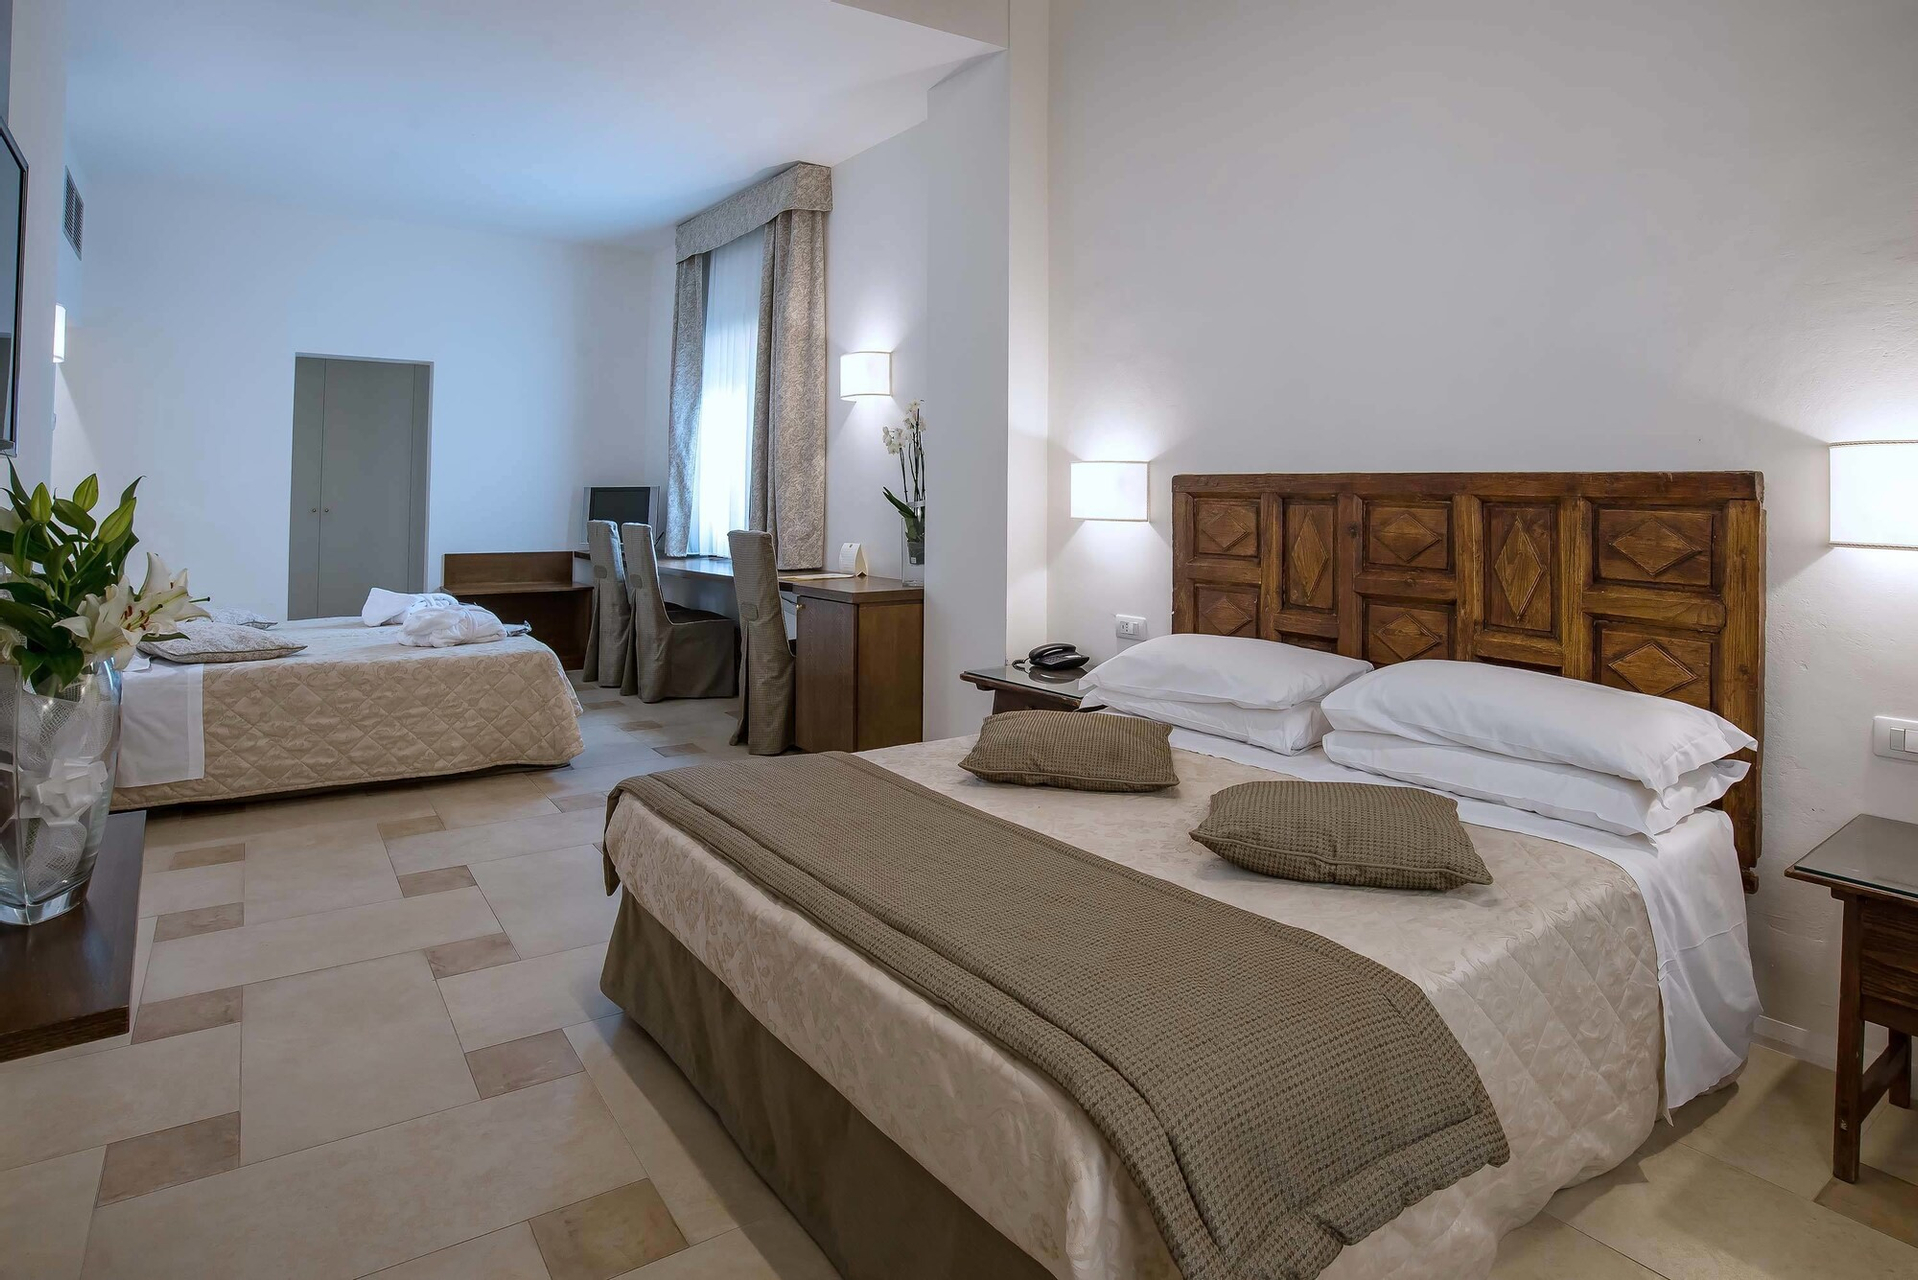 Bedroom 3, Machiavelli Palace, Florence